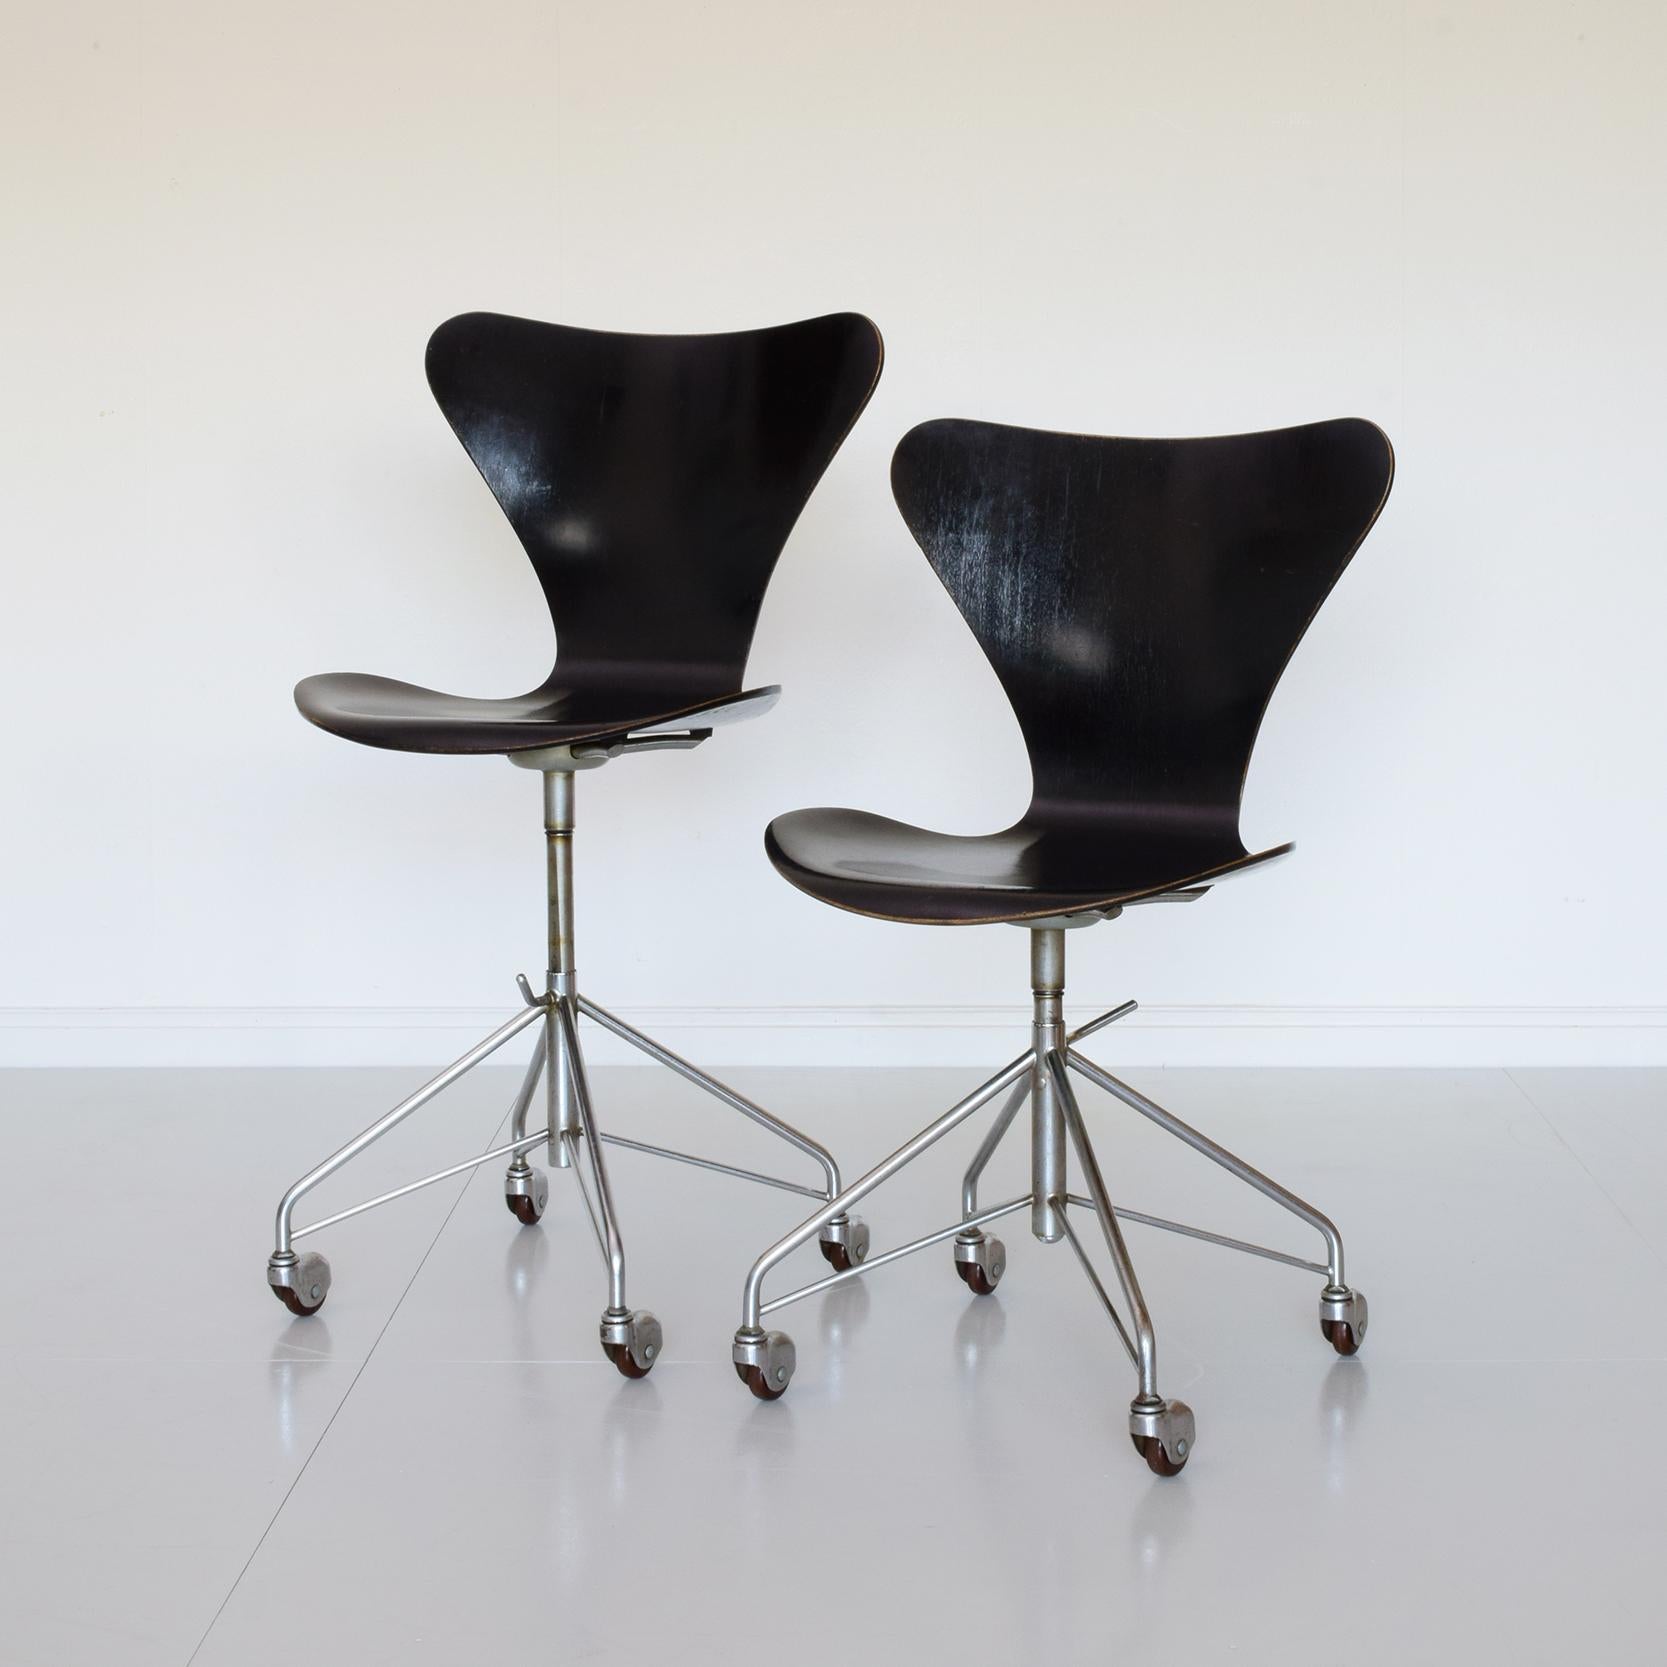 Arne Jacobsen (designer)
Fritz Hansen (manufacturer), Denmark
Pair of Model 3117 desk chairs, designed 1955

Black lacquered veneered plywood, nickel-plated steel, swivel base on castors, height adjustable.
These are desirable early production